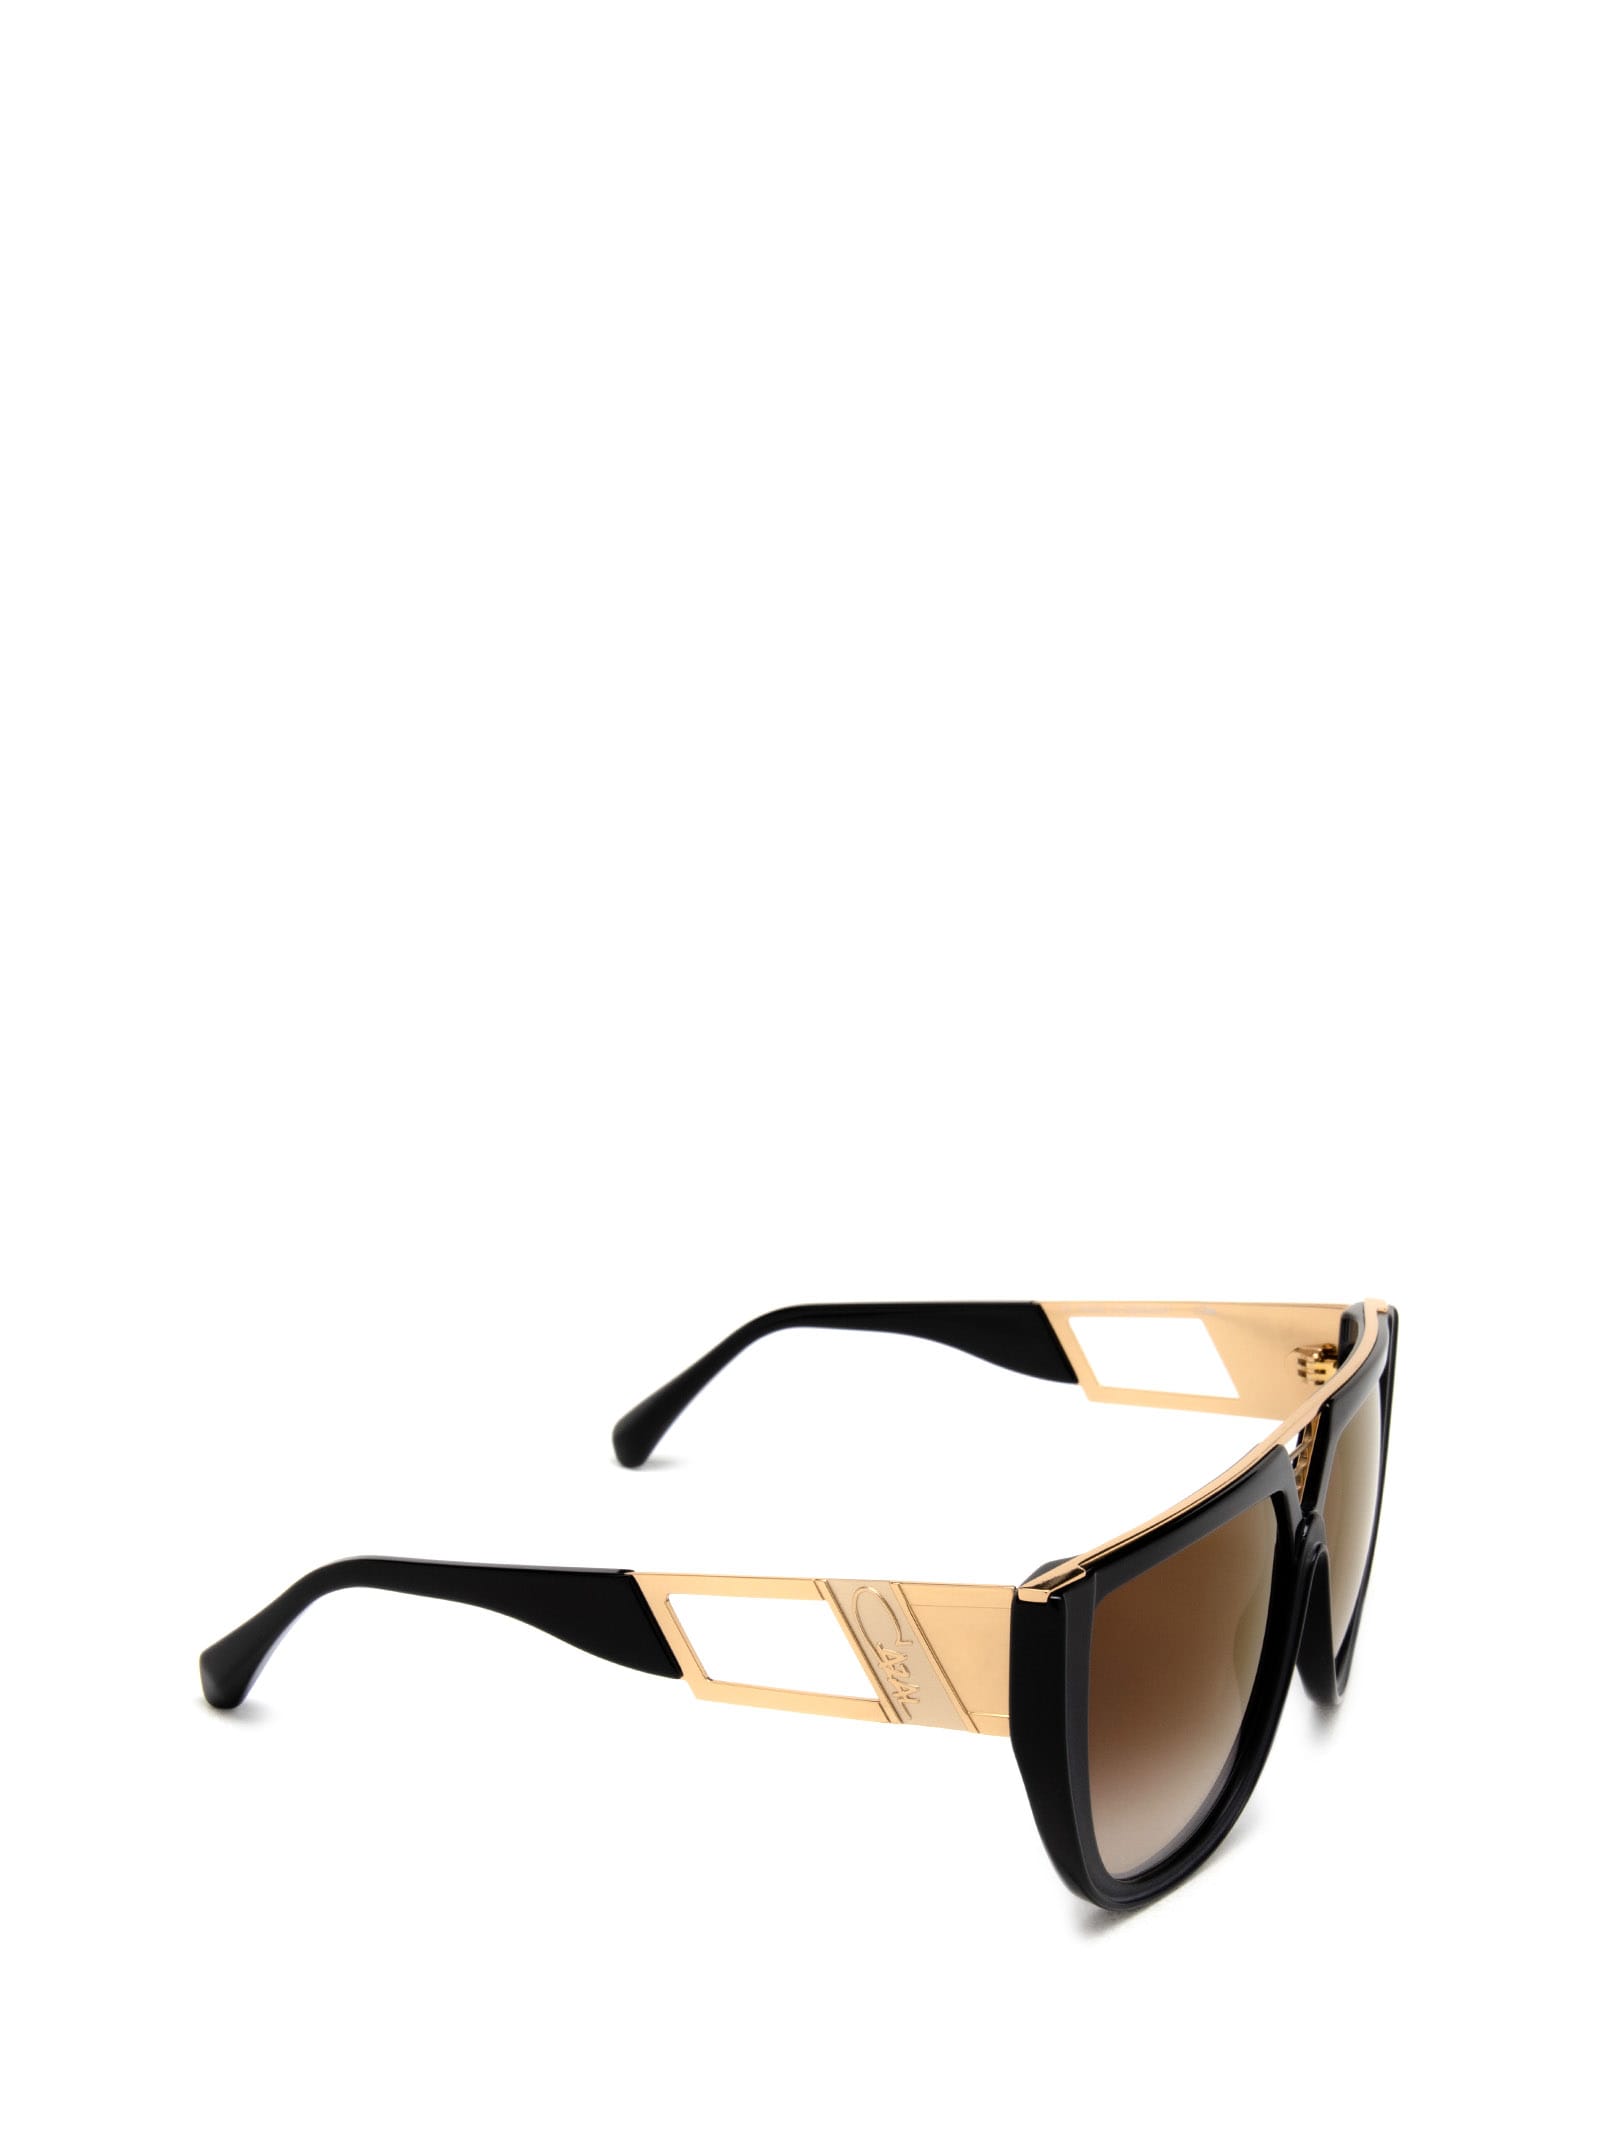 Shop Cazal 8511 Black - Gold Sunglasses